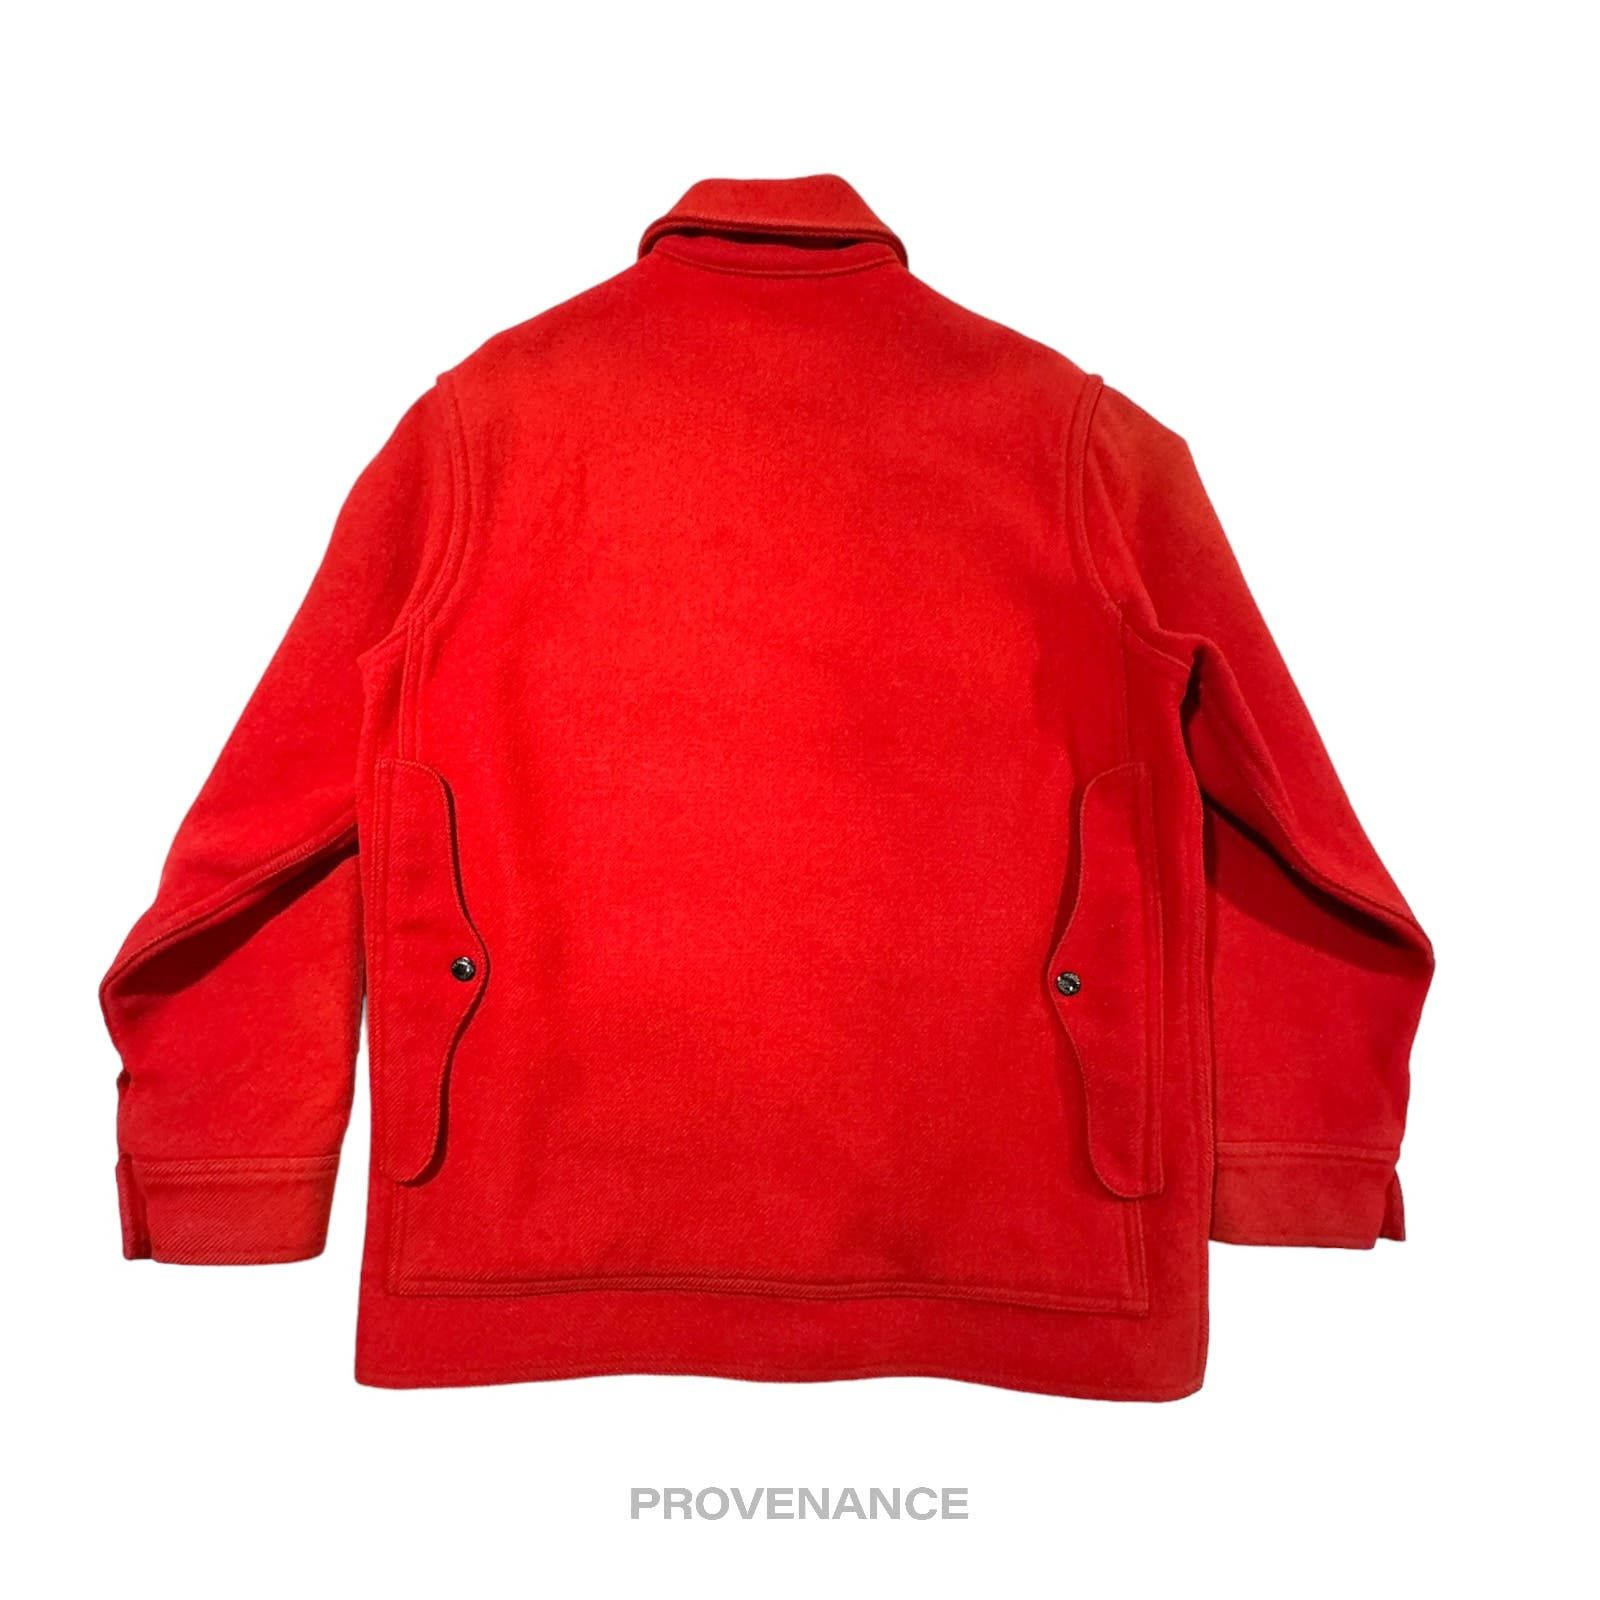 Filson 🔴 Filson Mackinaw Wool Cruiser Jacket - Scarlet Red 42 M Size US M / EU 48-50 / 2 - 2 Preview